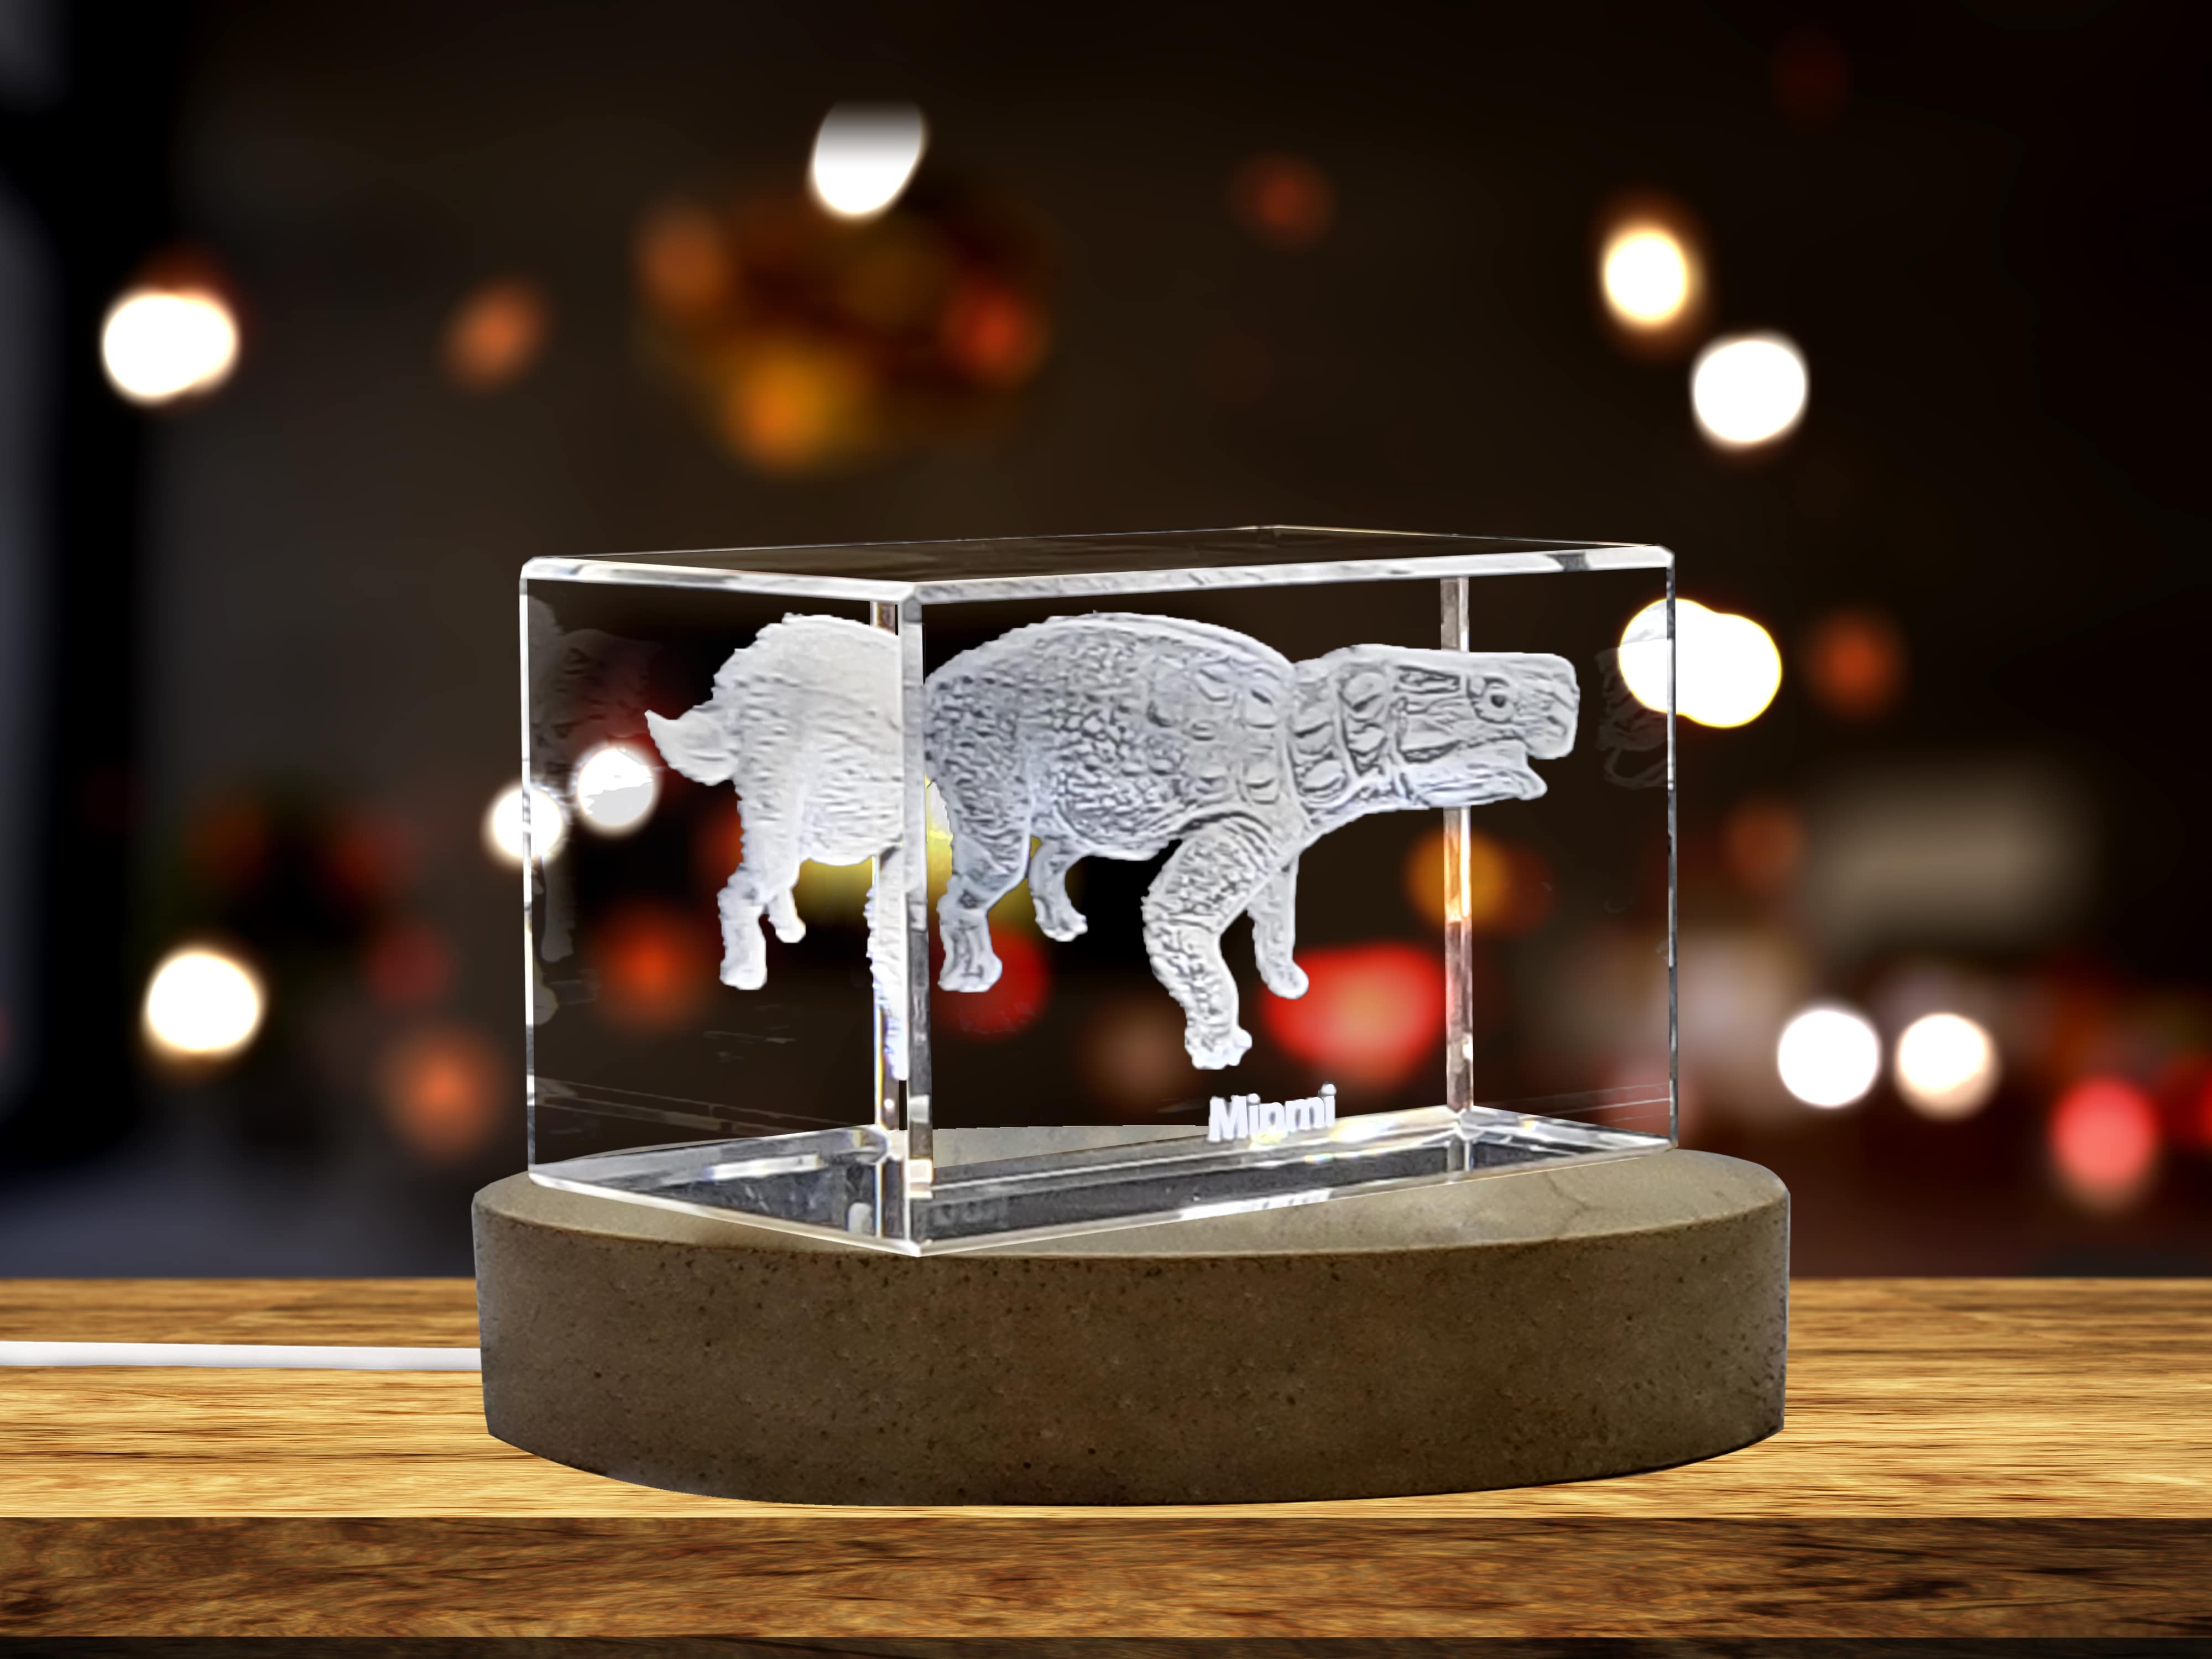 Minmi Dinosaur 3D Engraved Crystal 3D Engraved Crystal Keepsake/Gift/Decor/Collectible/Souvenir A&B Crystal Collection